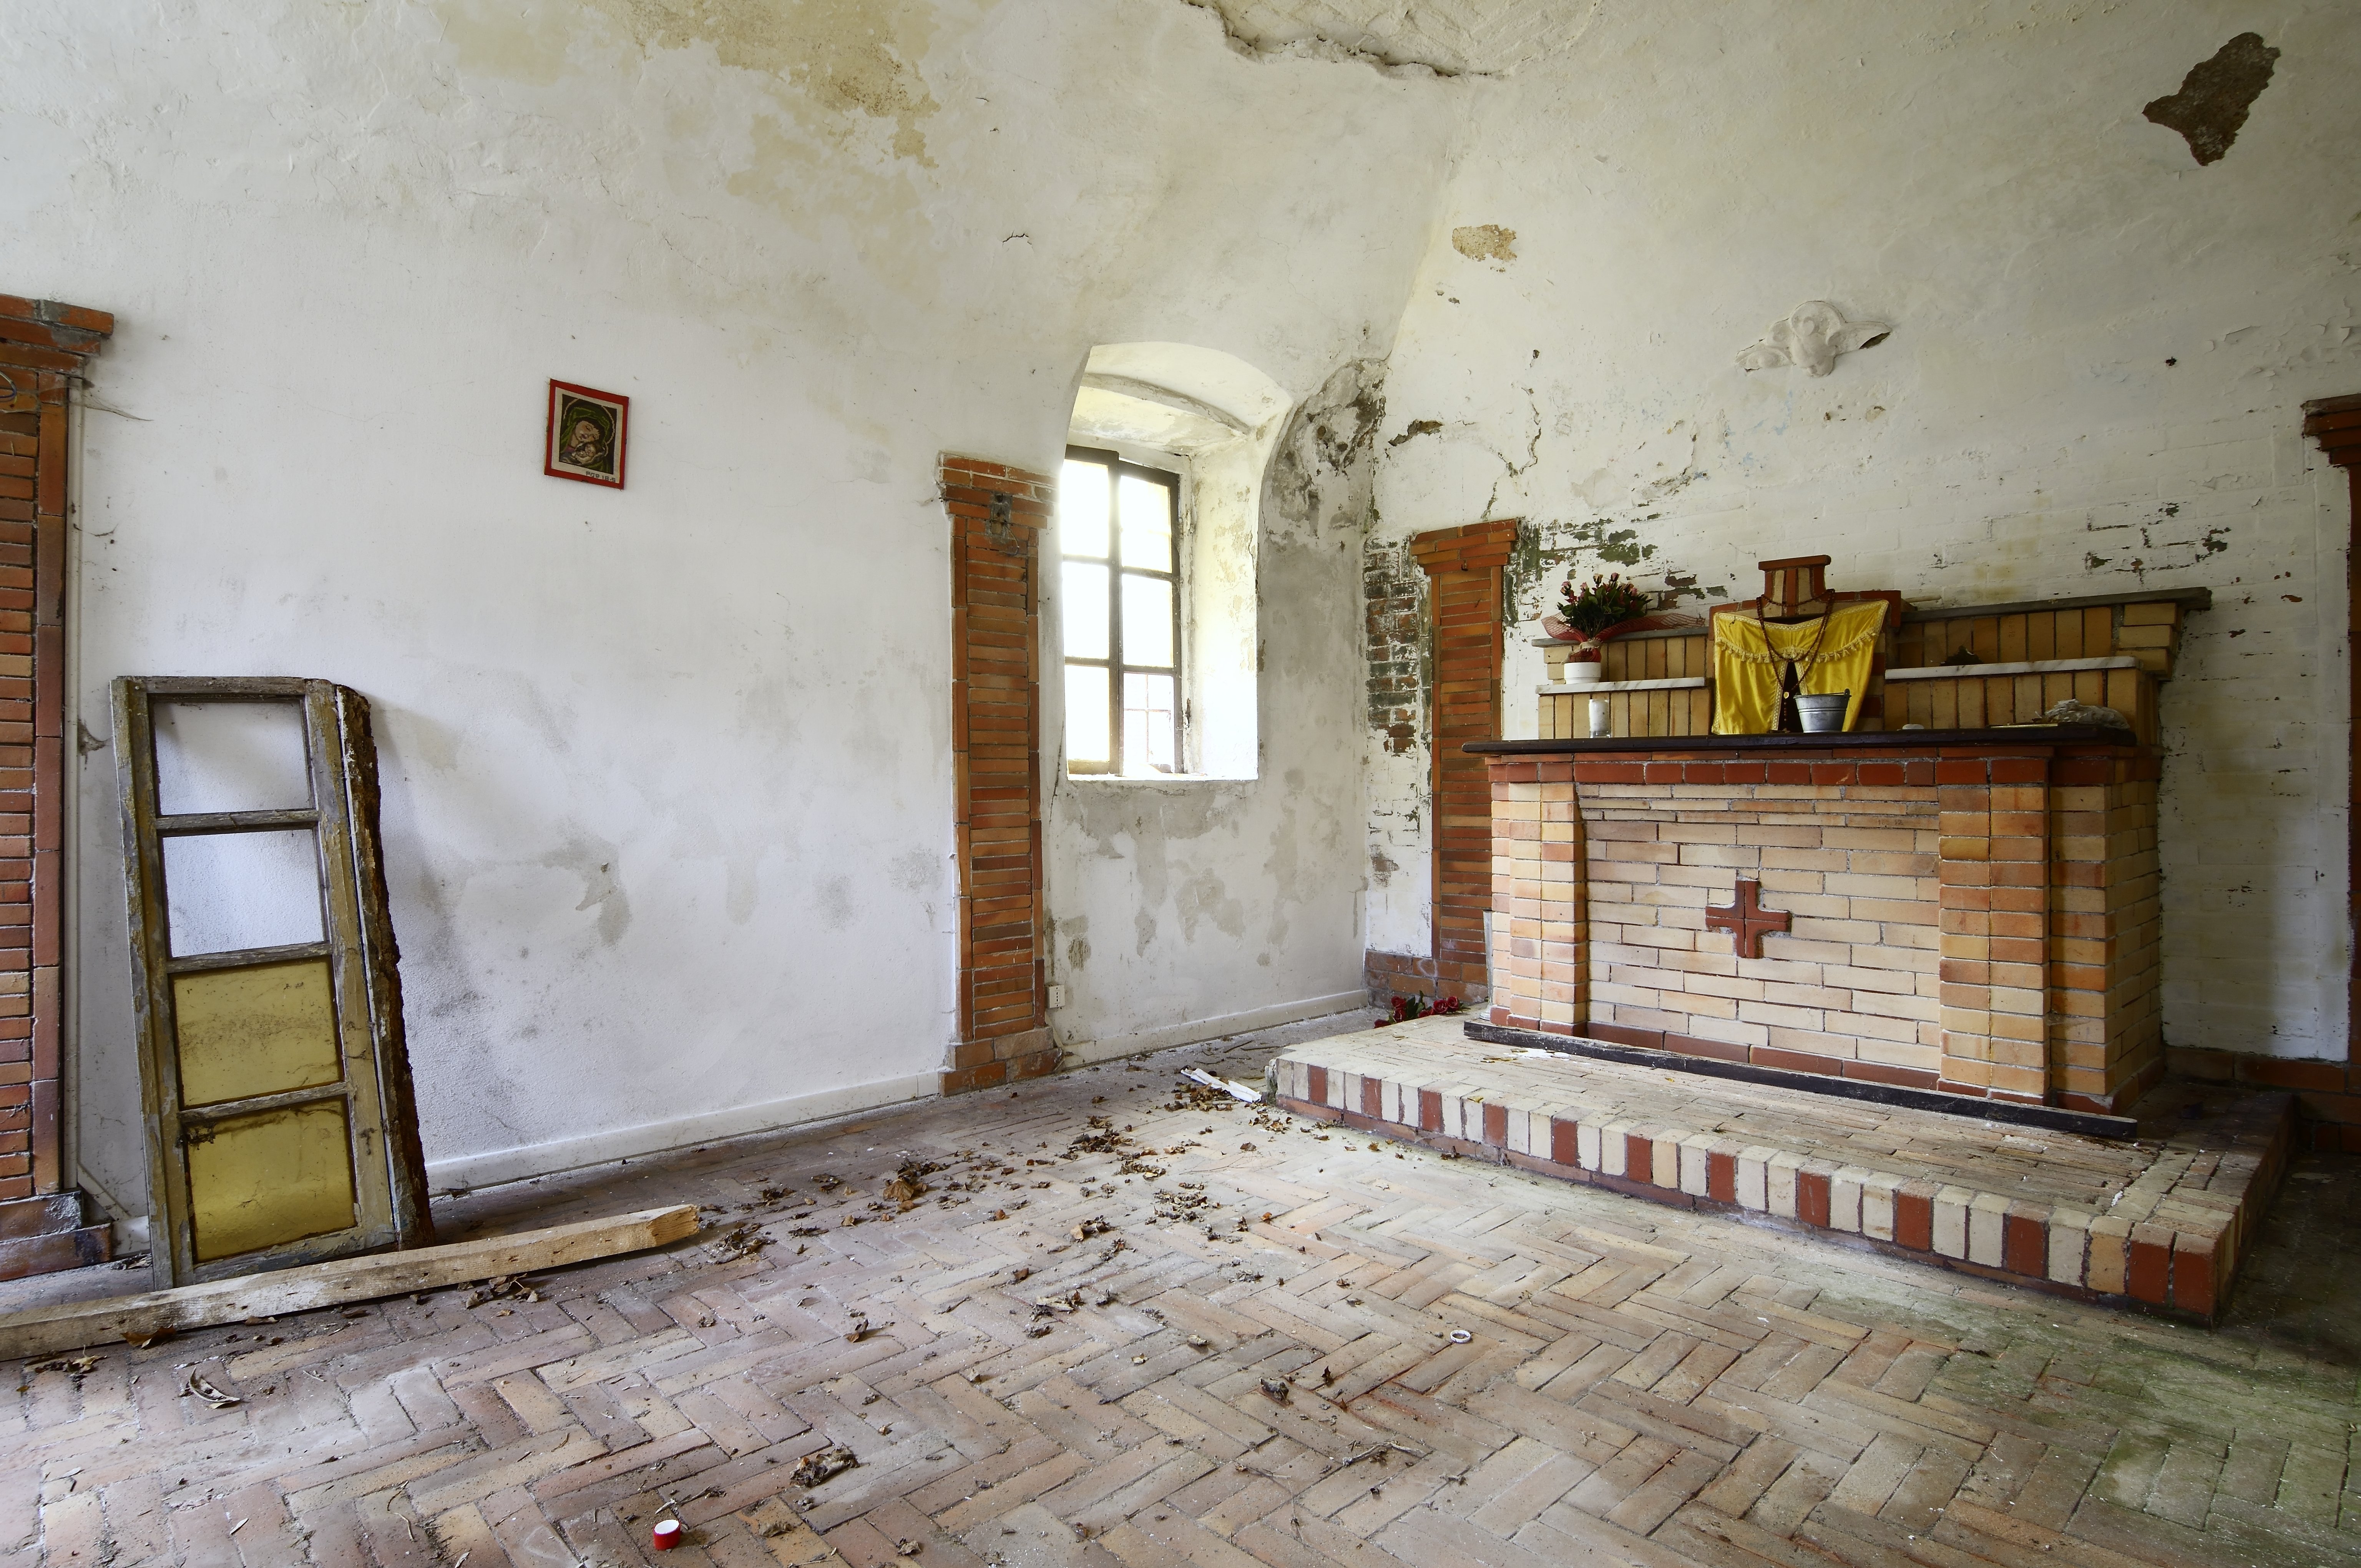 Casa abandonada. Fuente: Shutterstock